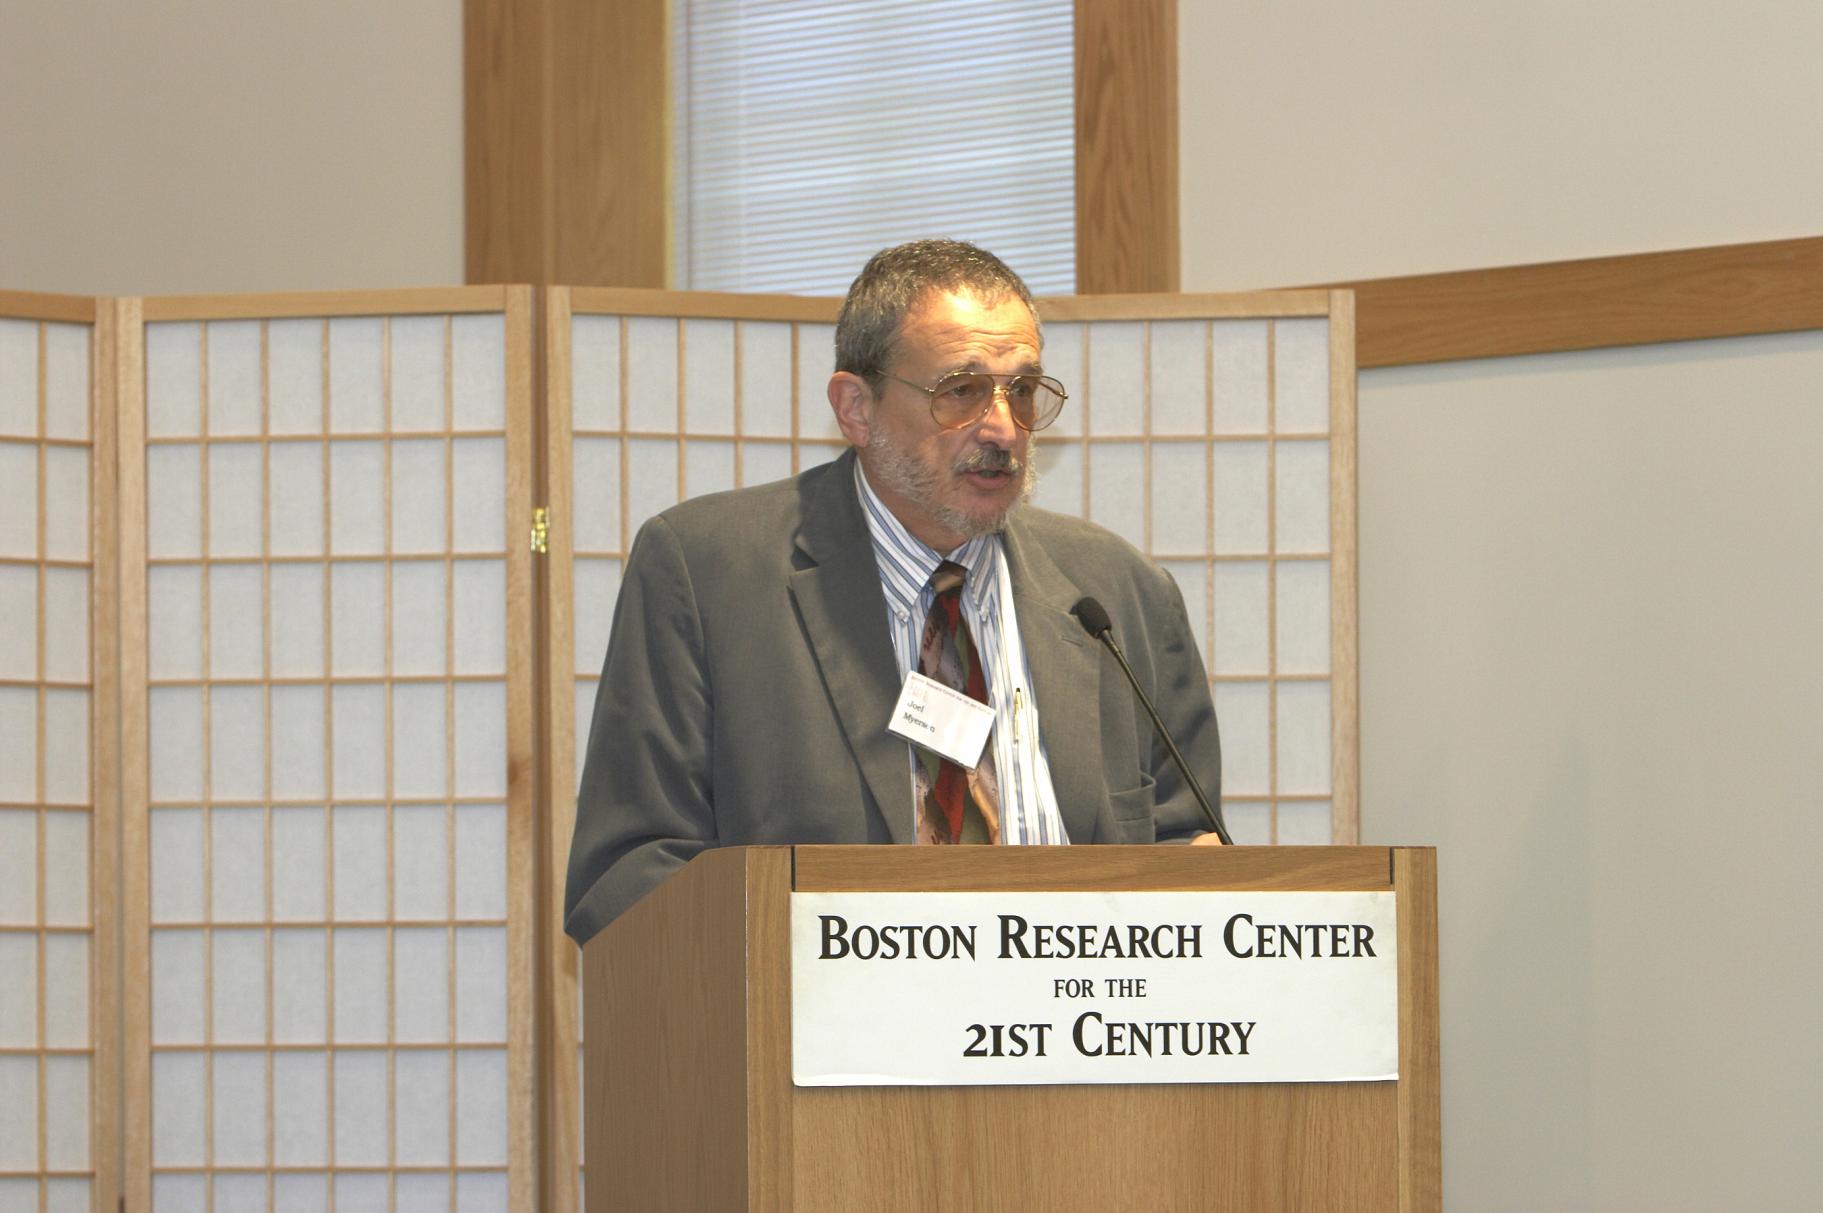 2005 Ikeda Forum speaker Joel Myerson at the podium